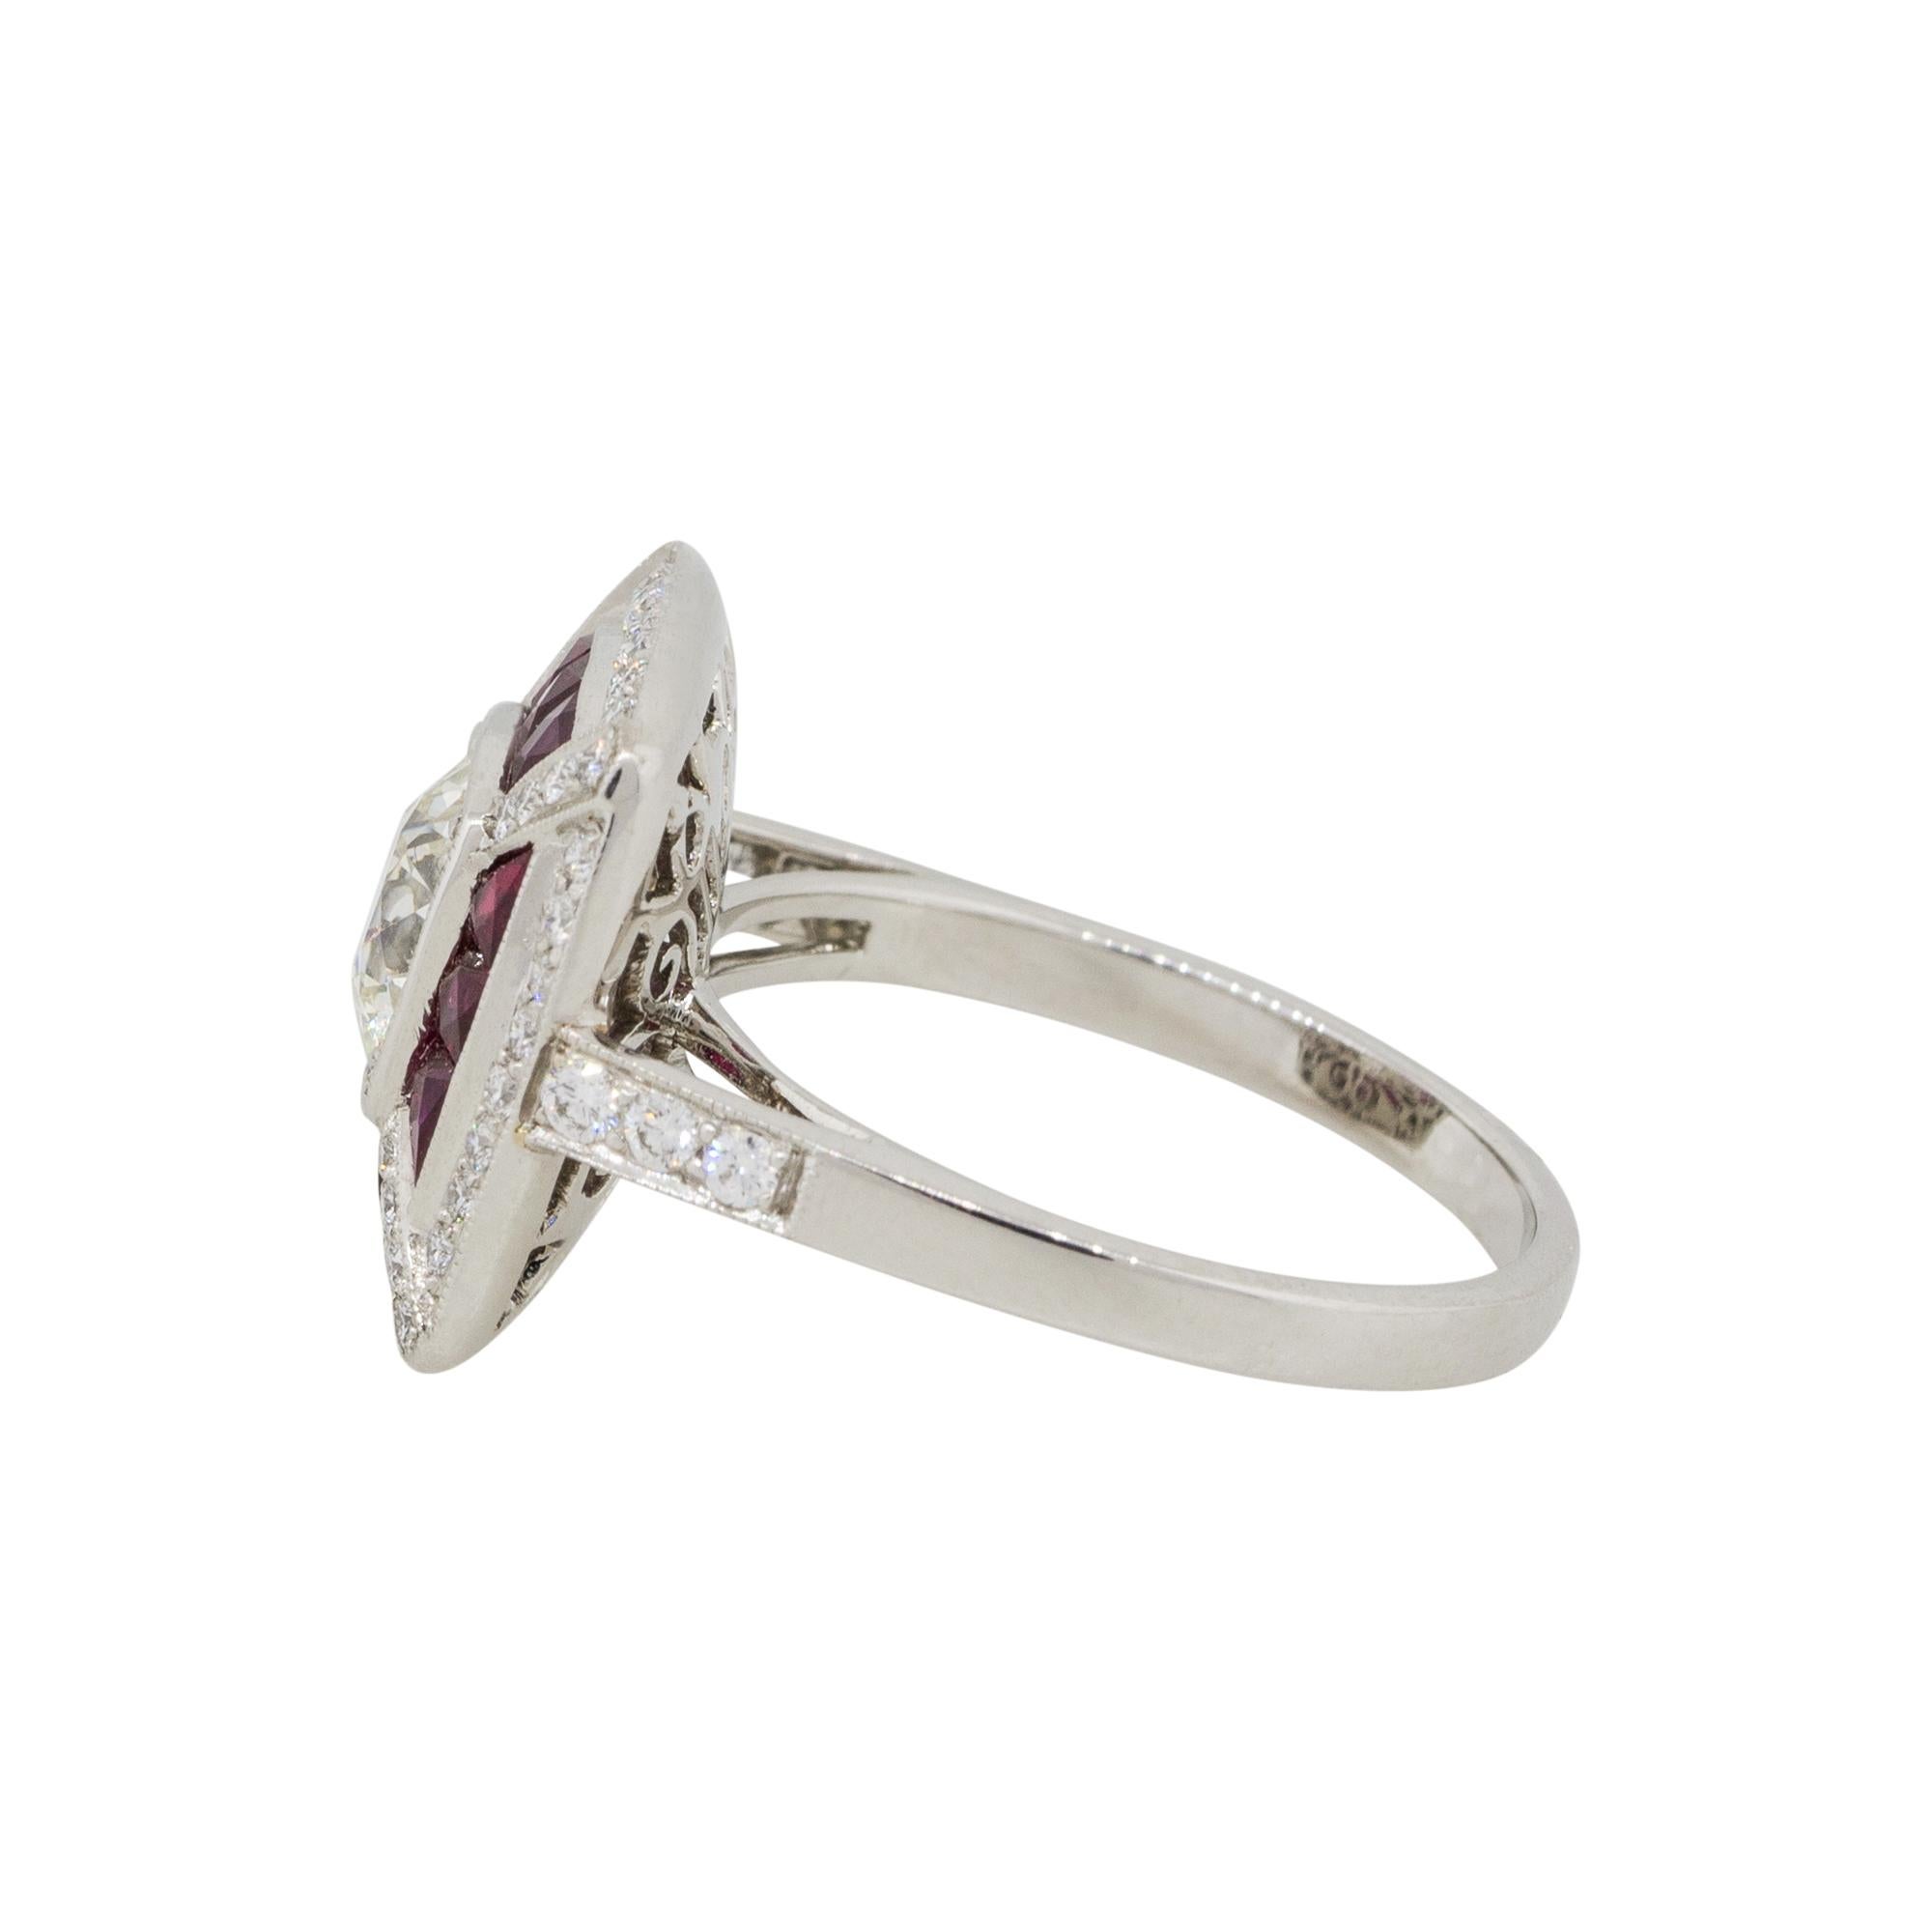 Old European Cut 1.26 Carat Old Euro Cut Bezel Set Diamond Ring with Rubies Platinum in Stock